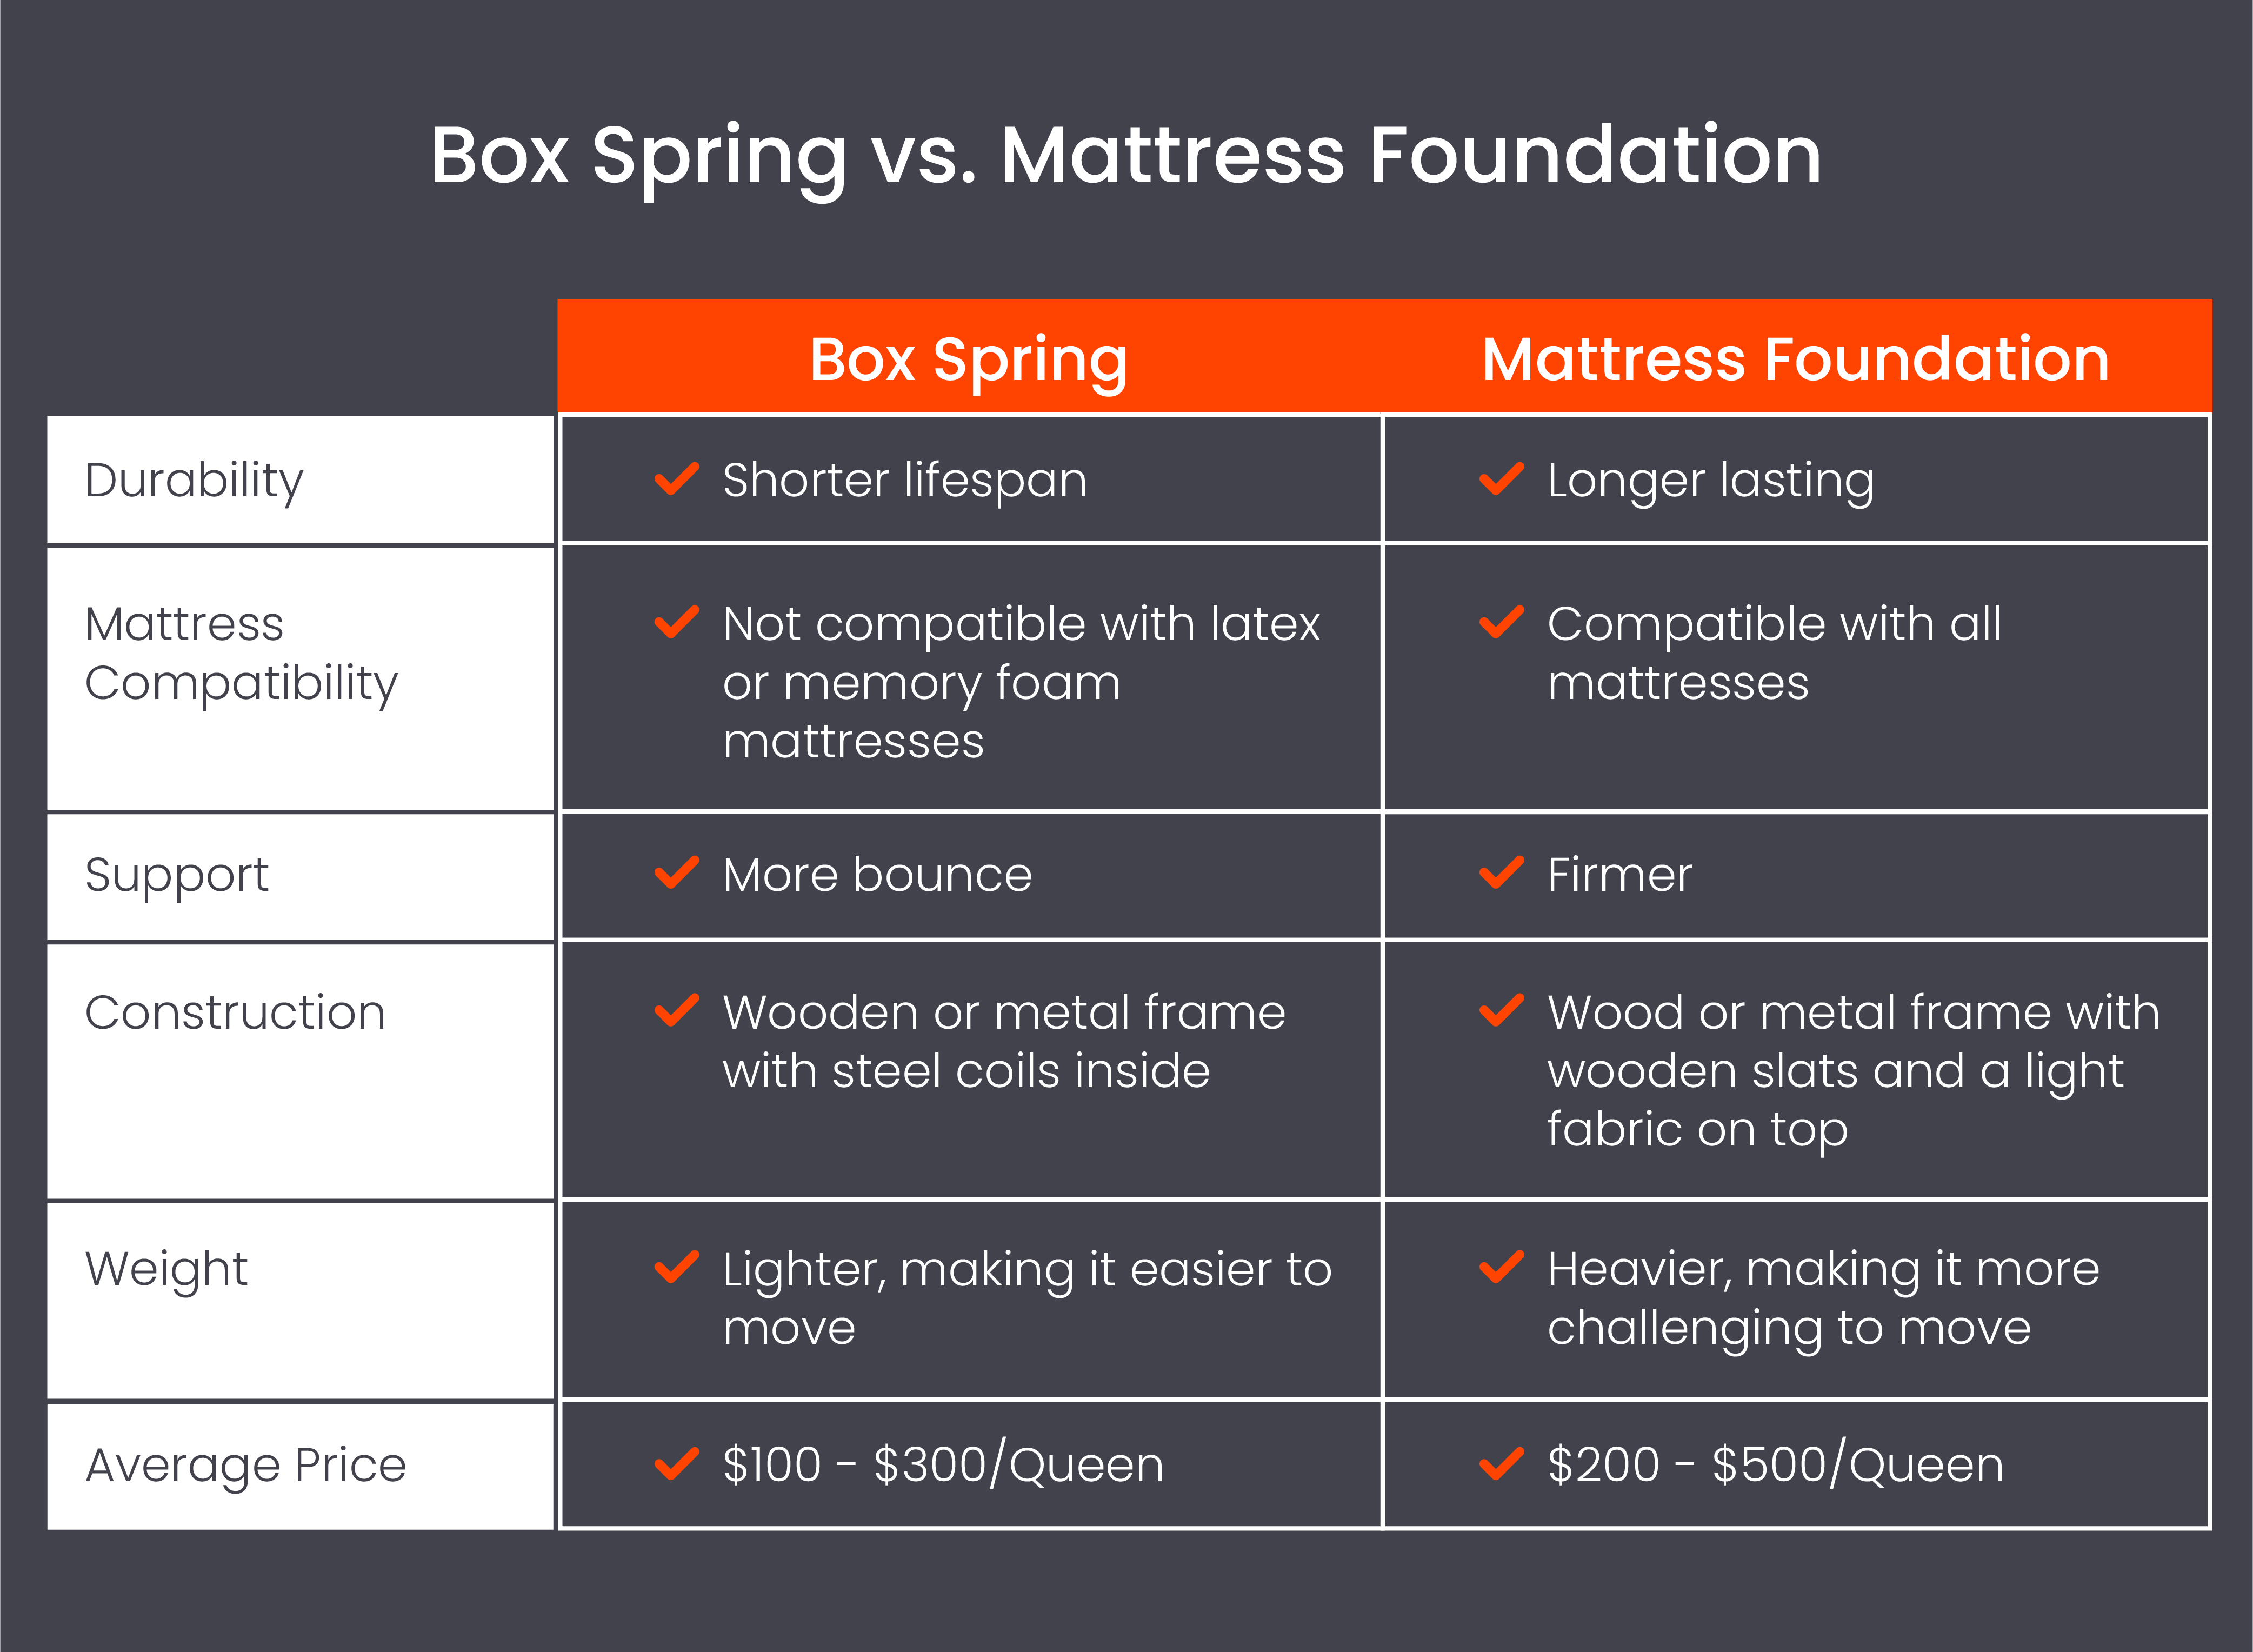 Box spring vs. foundation